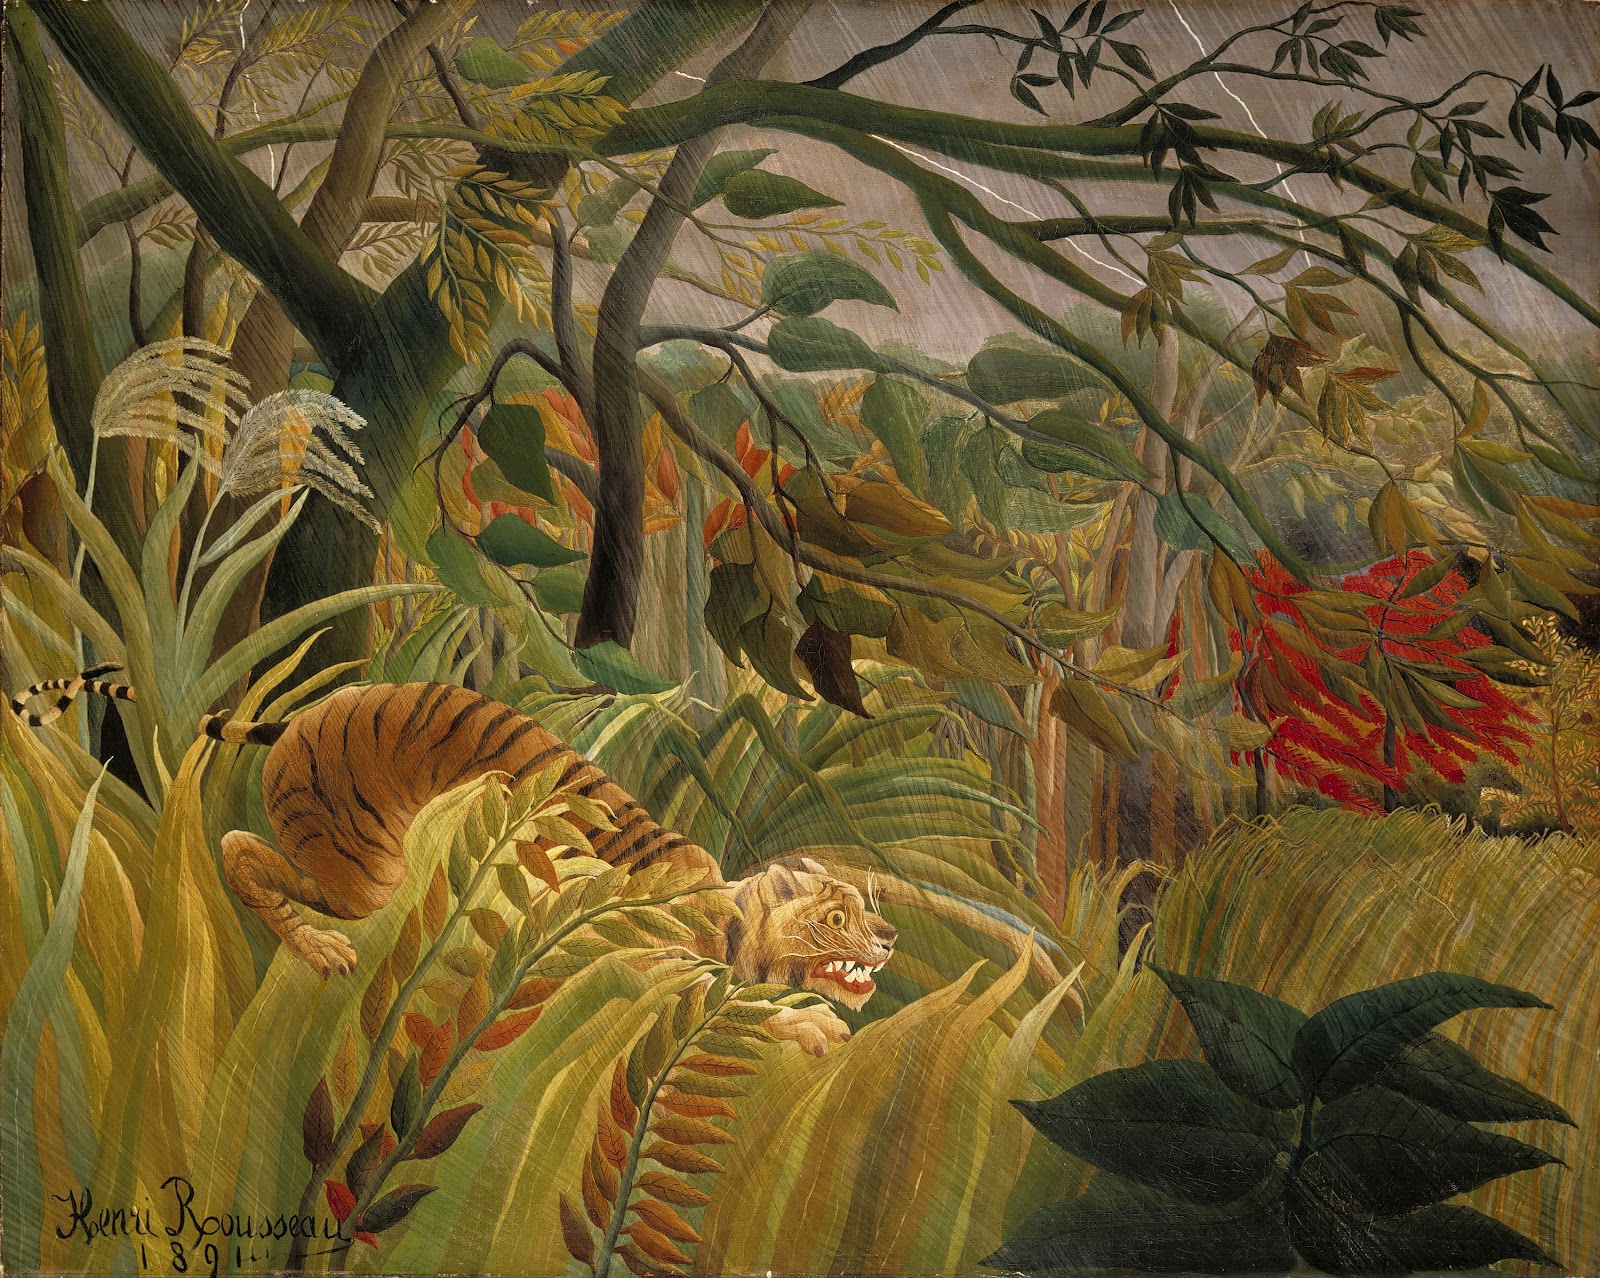 Henri Rousseau jungles: Henri Rousseau, Tiger in a Tropical Storm, 1891, National Gallery, London.